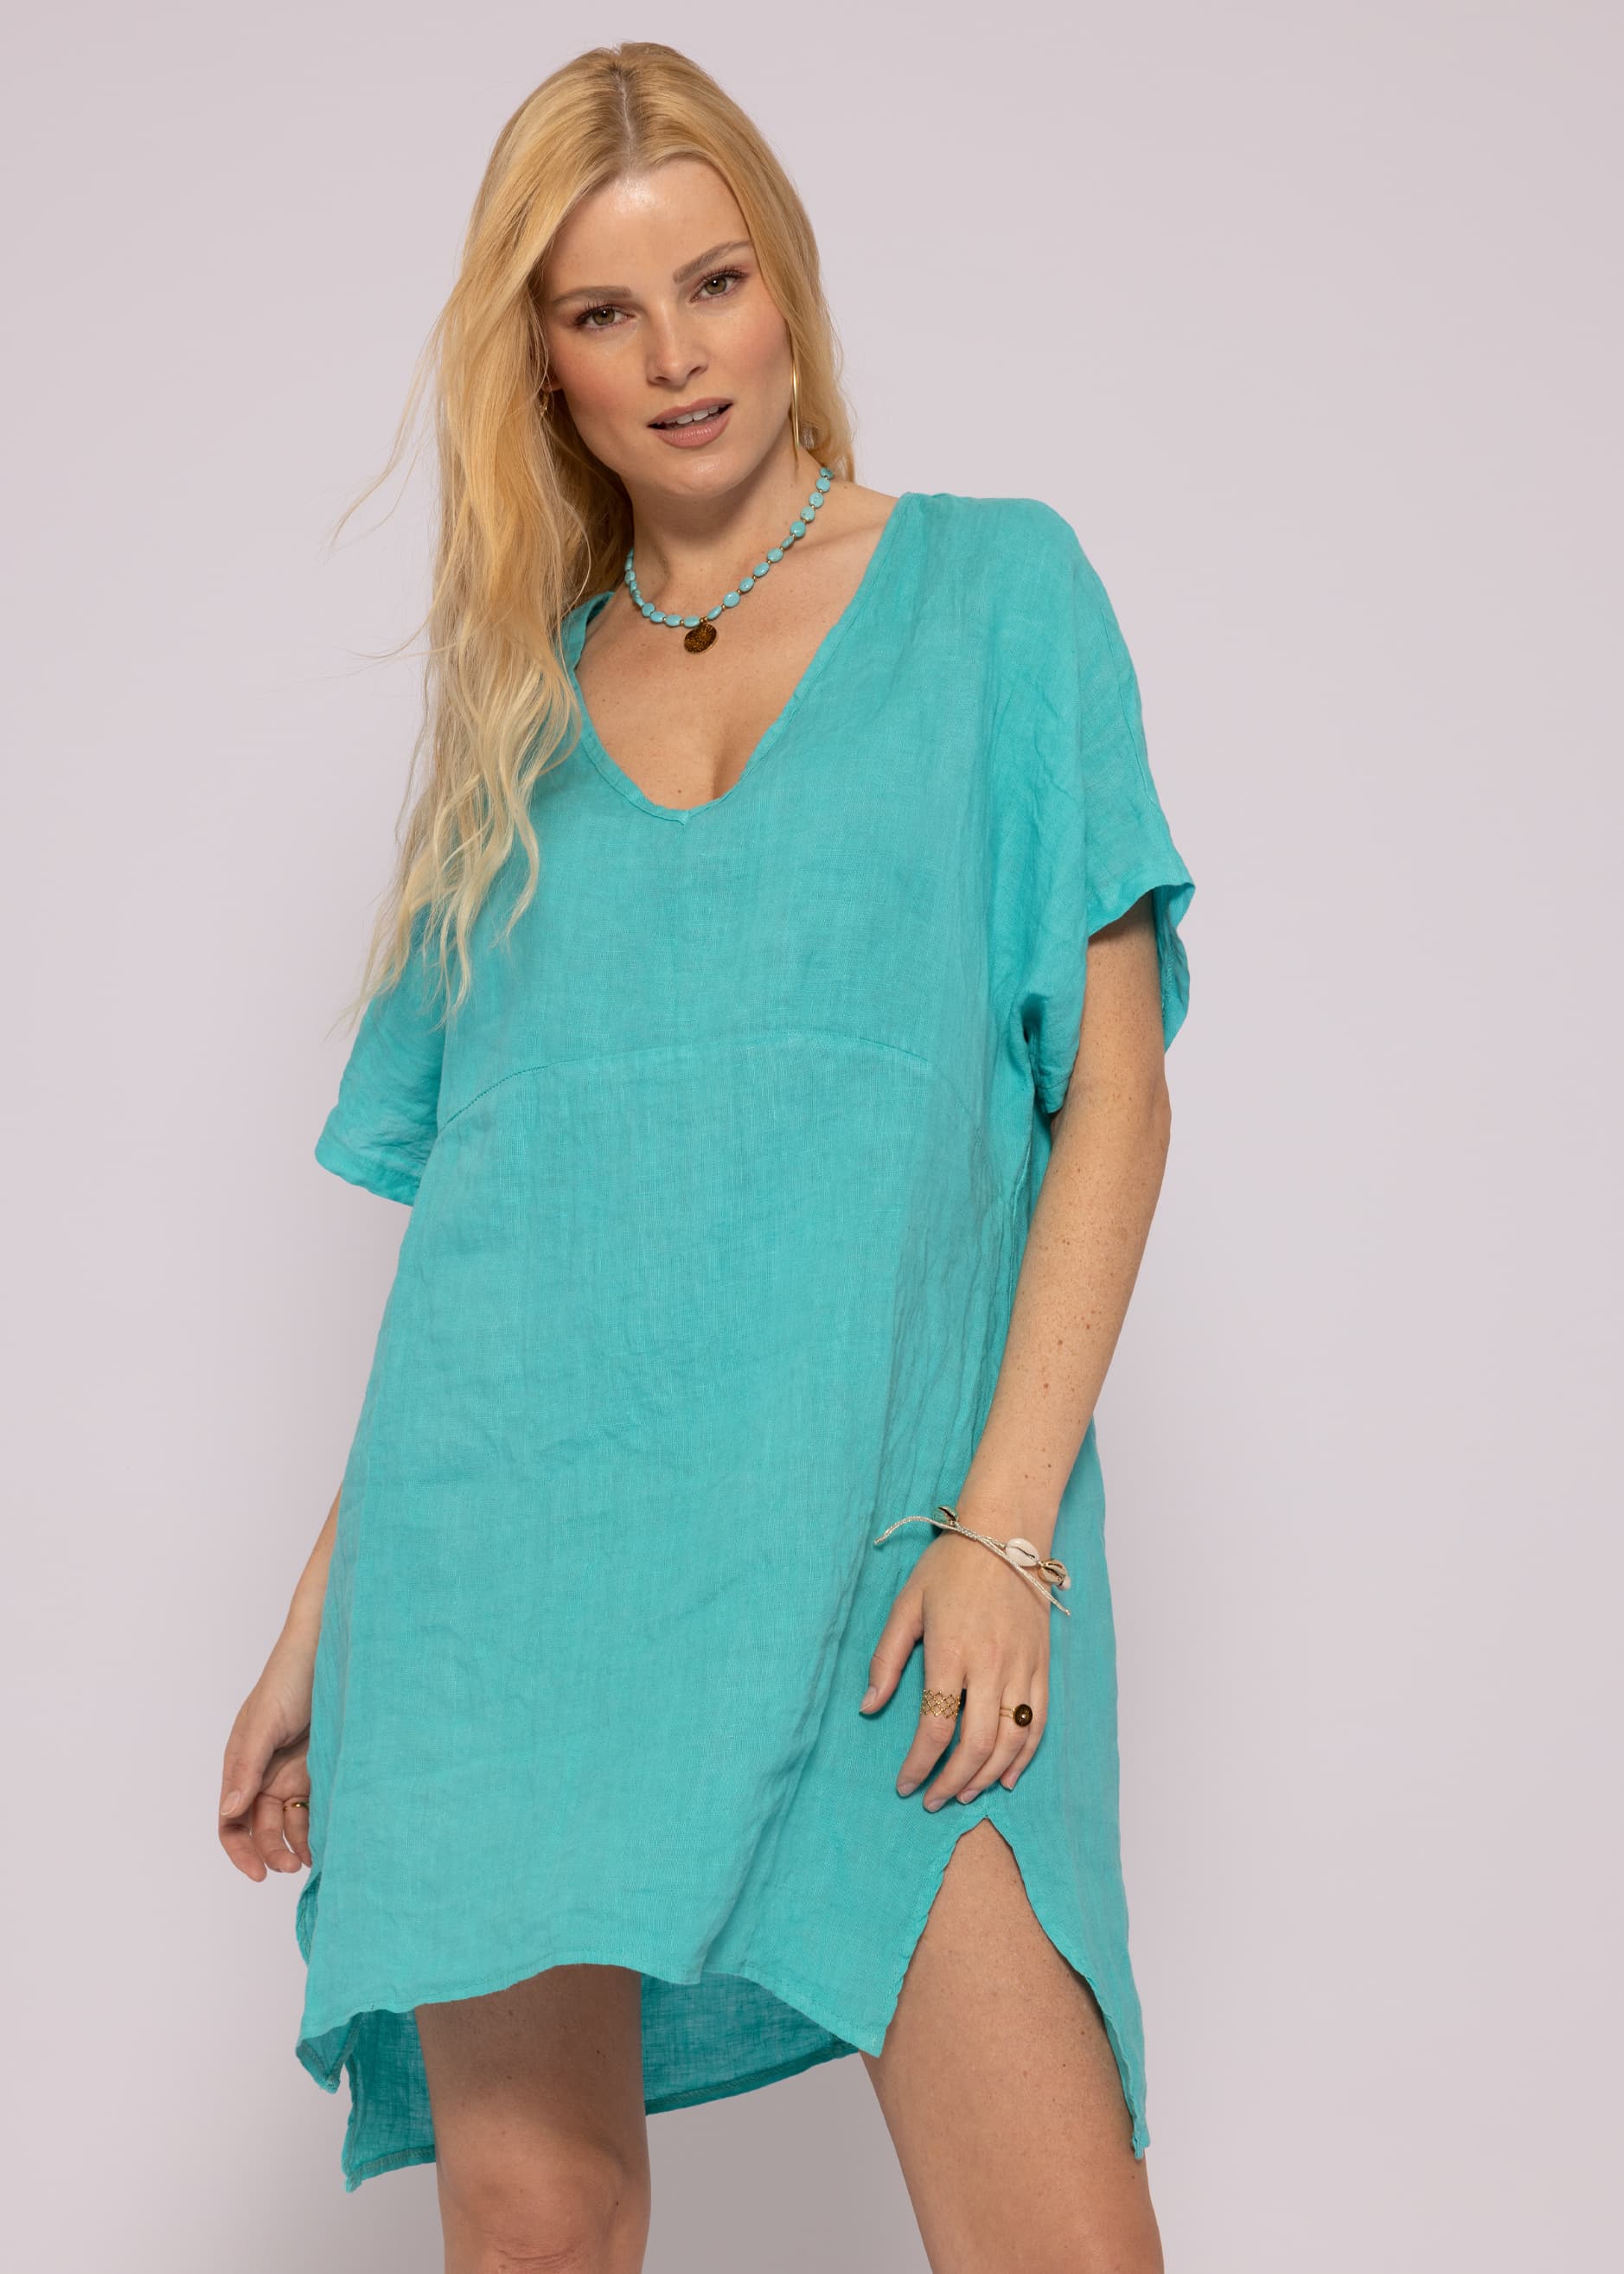 Linen tunic turquoise | Clothing | SassyClassy.com